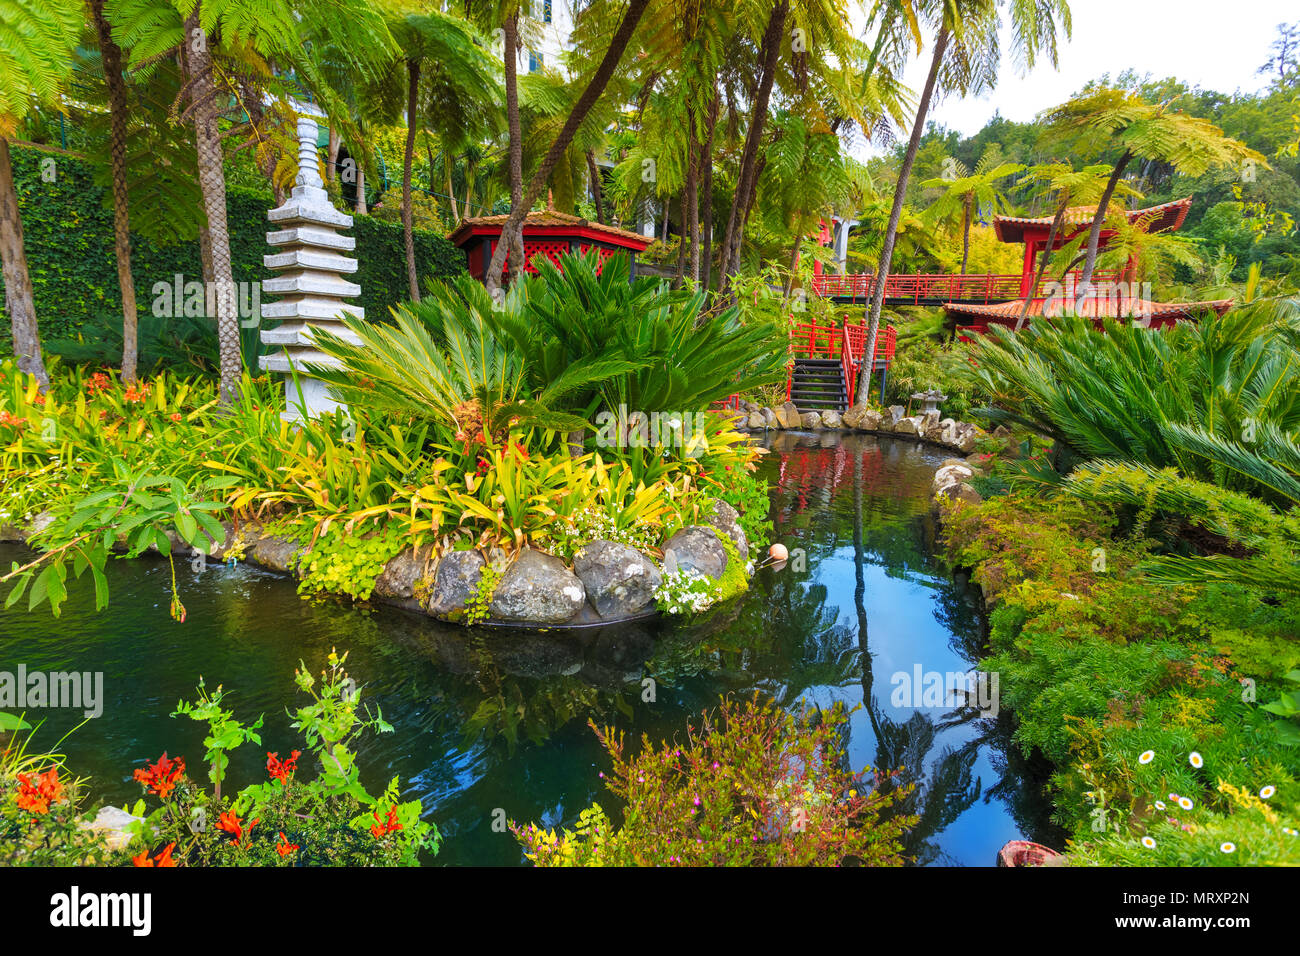 Monte tropical garden of Madeira island, Portugal Stock Photo